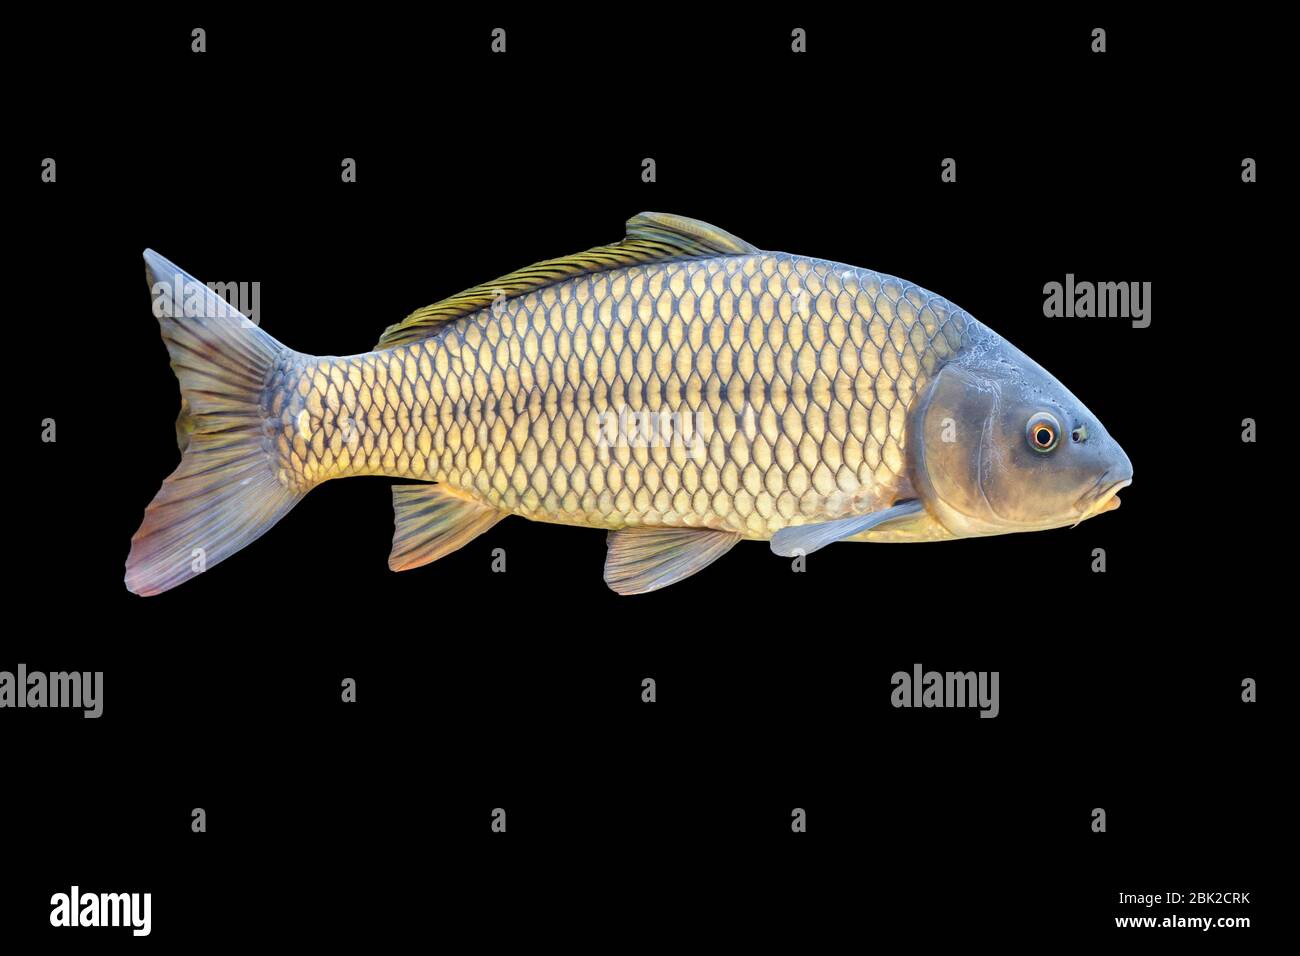 European carp or Cyprinus carpio, a species of freshwater fish. Isolated over black Stock Photo